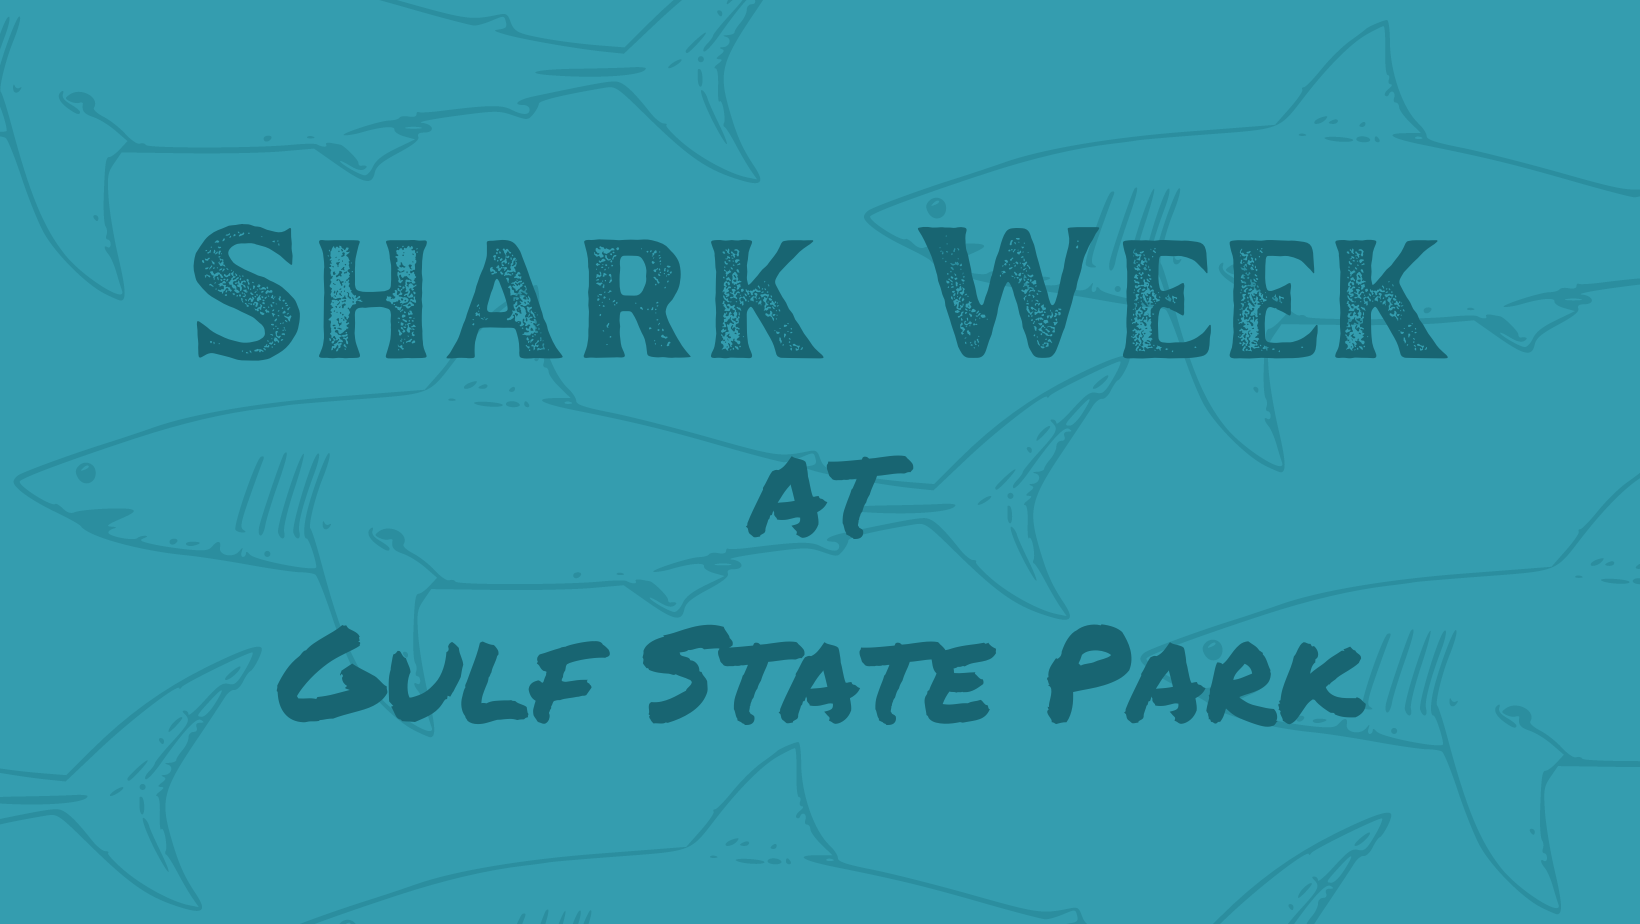 Shark Week 2022 at Gulf State Park